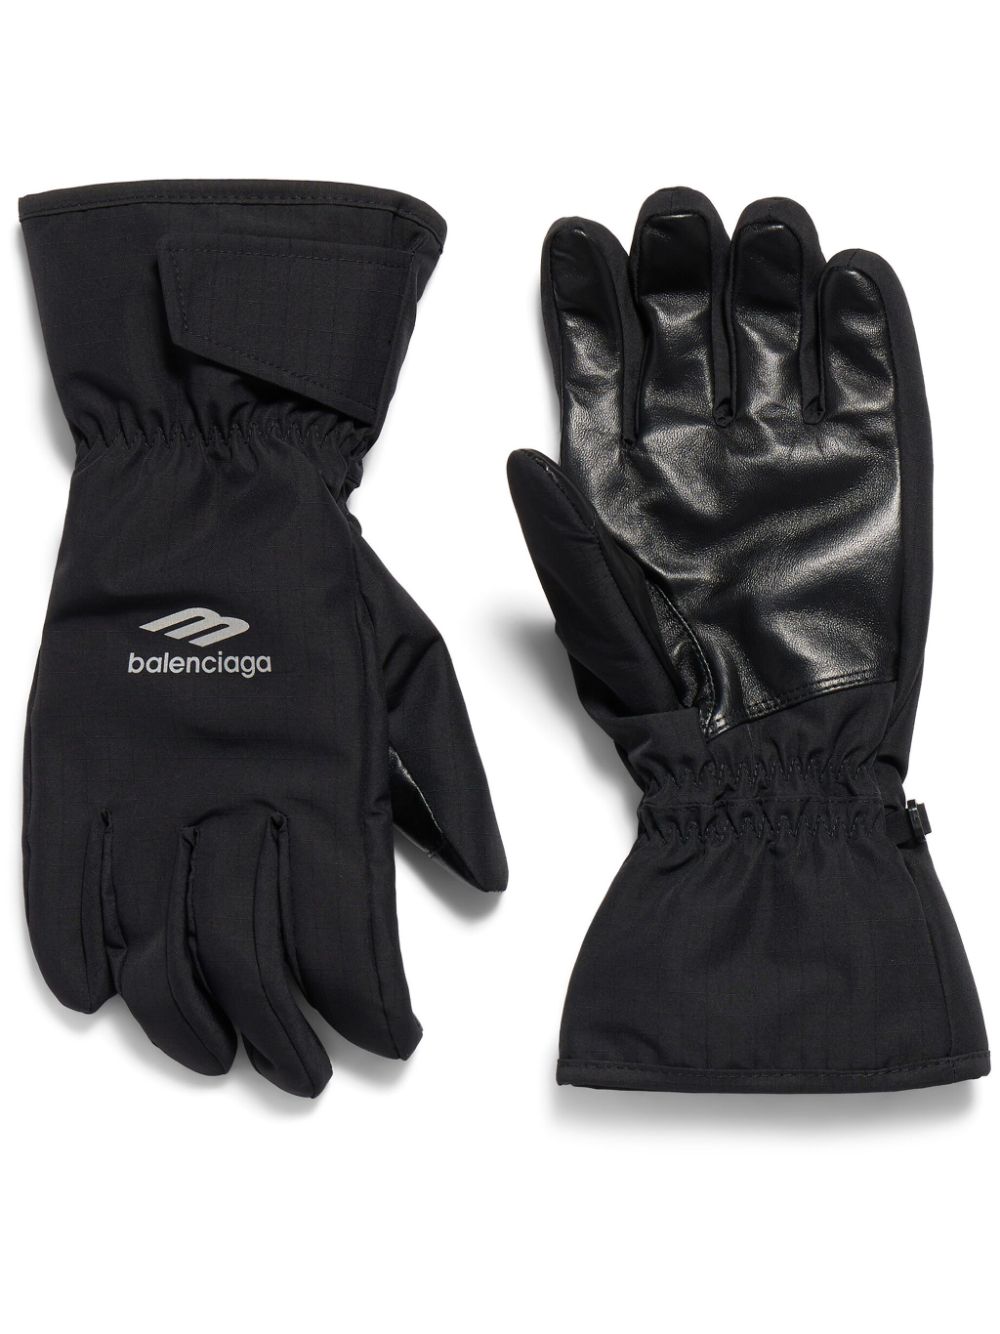 3B Sports Icon ski gloves<BR/><BR/>